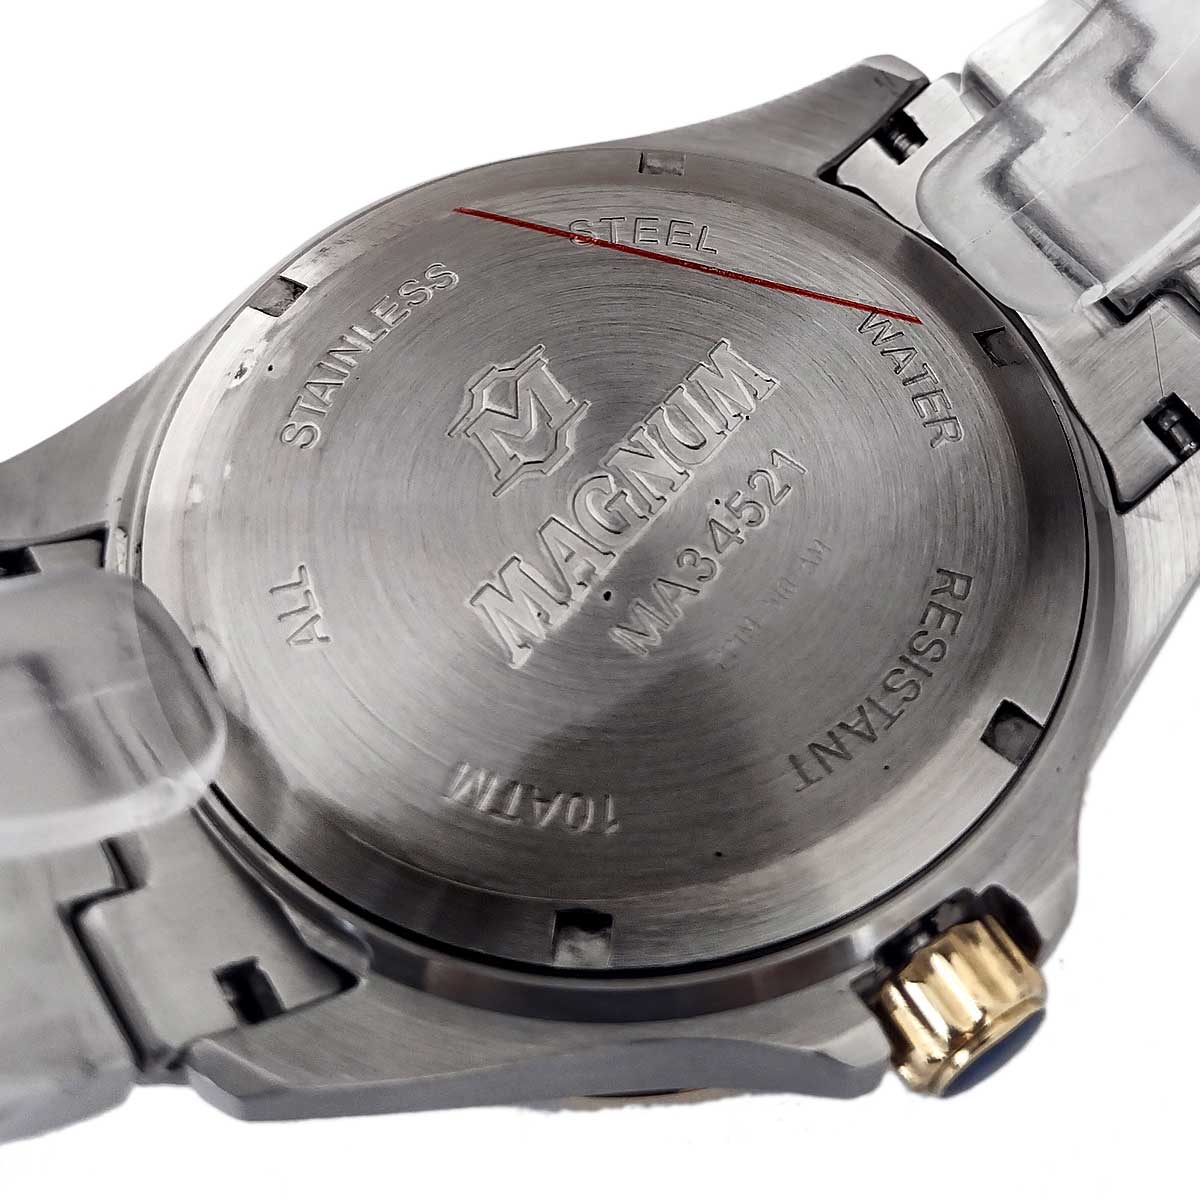 Relógio Magnum Steel Masculino MA32185S Pulseira Aço Prata Multifunção